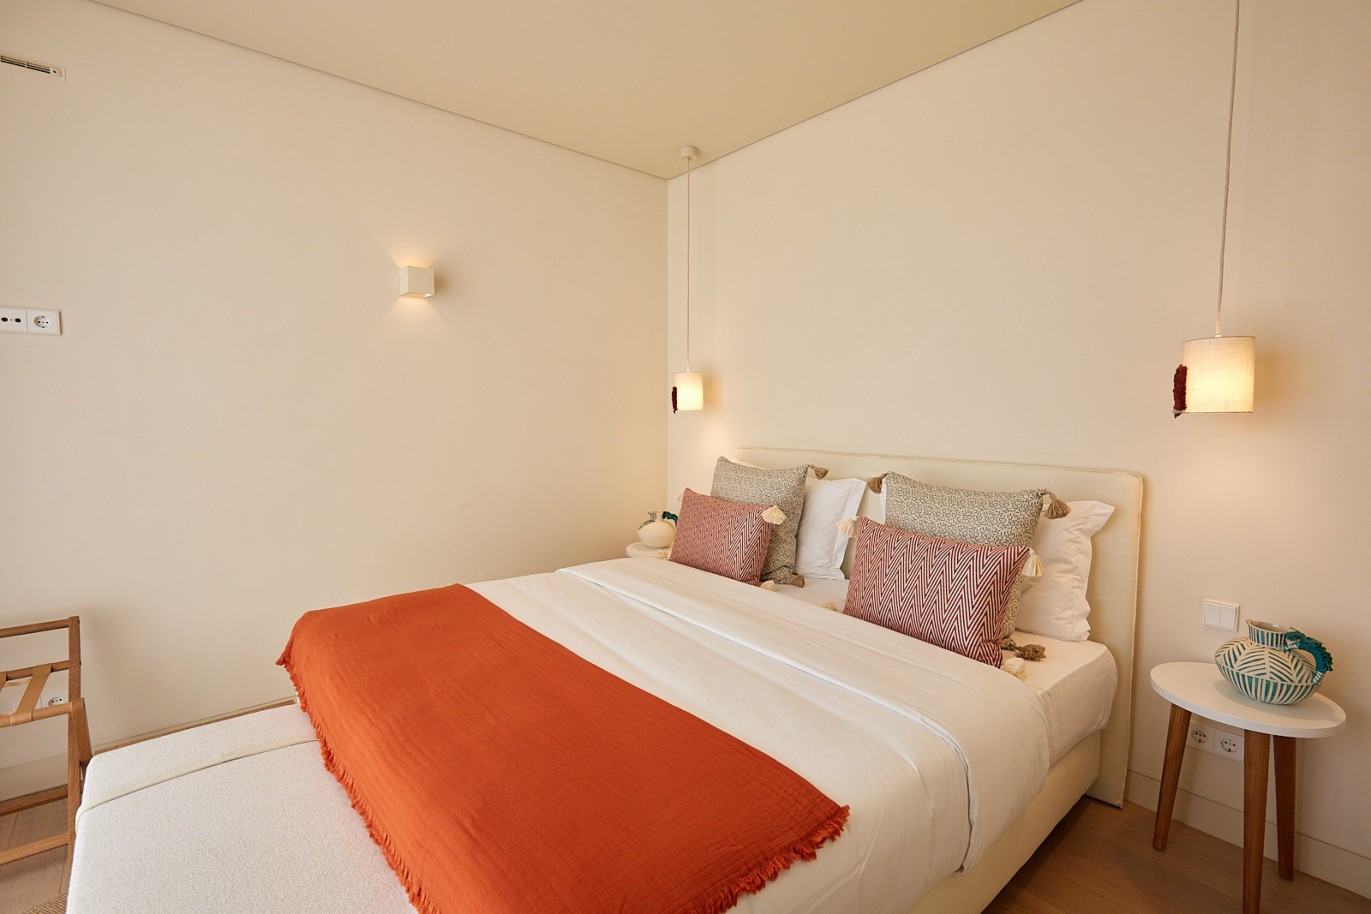 2 bedroom apartment in resort, for sale in Porches, Algarve_230548